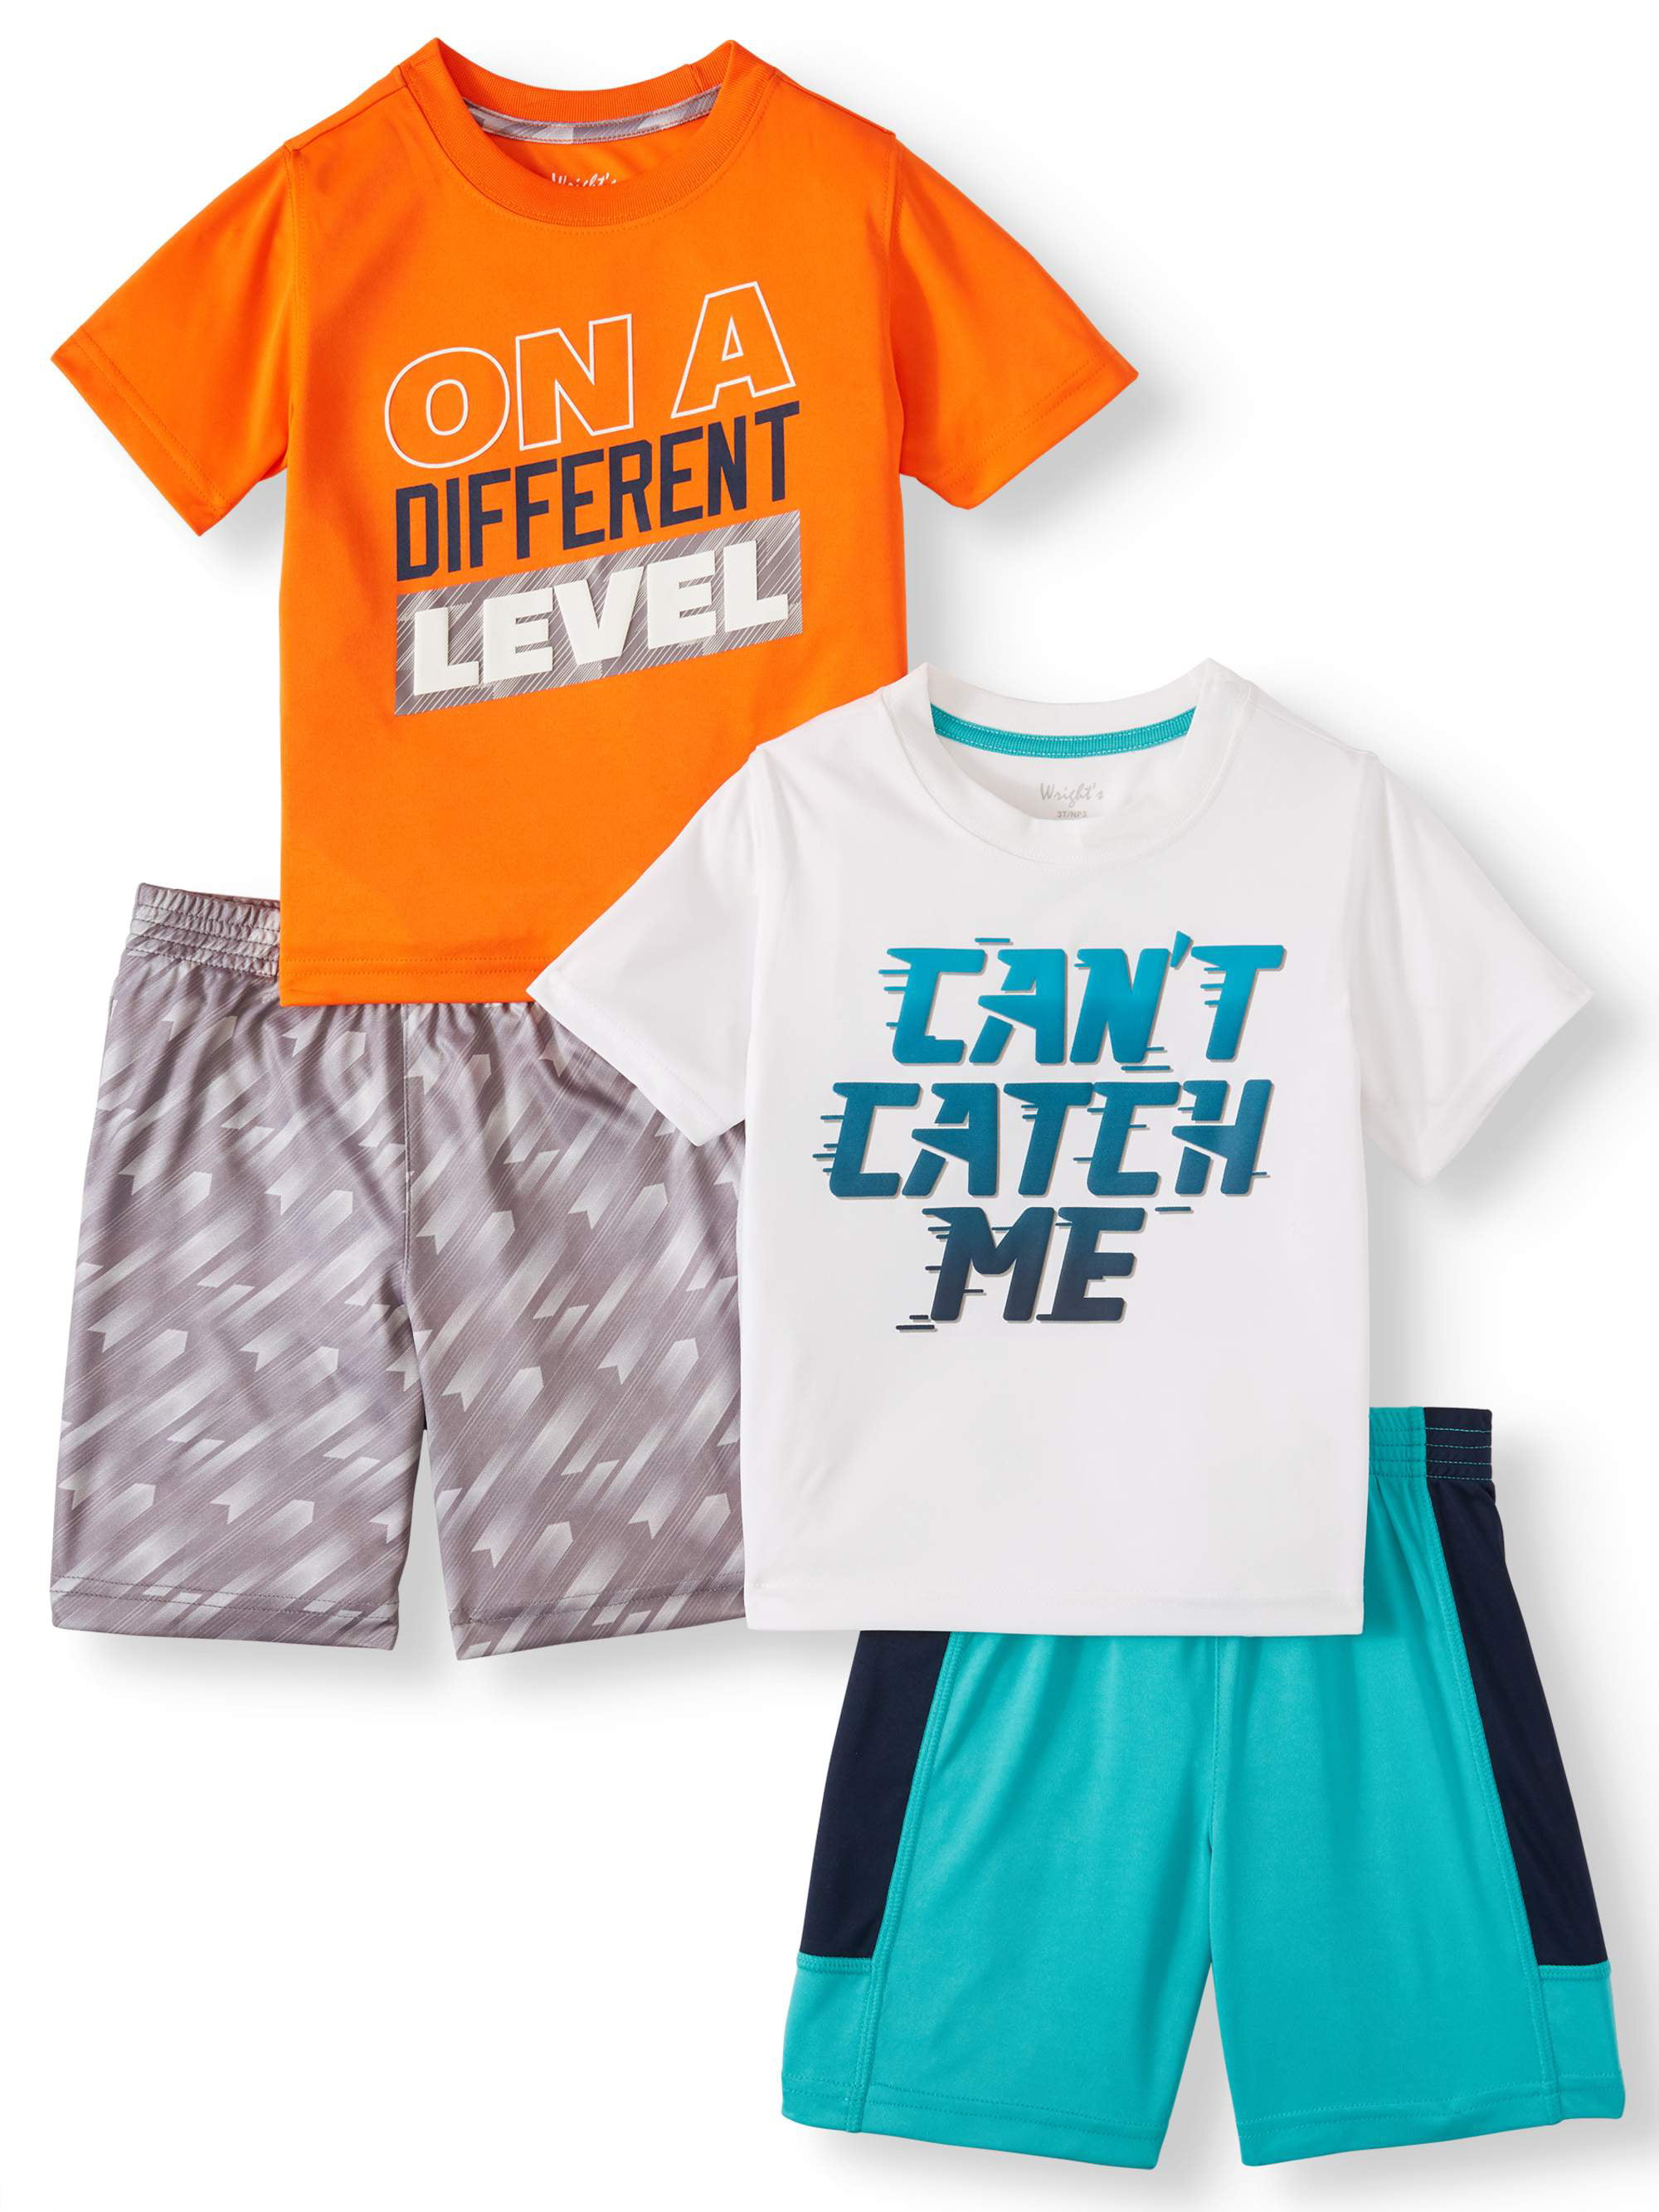 Wrights Mix & Match Outfits, 4pc Active Set (Toddler Boys) - Walmart.com